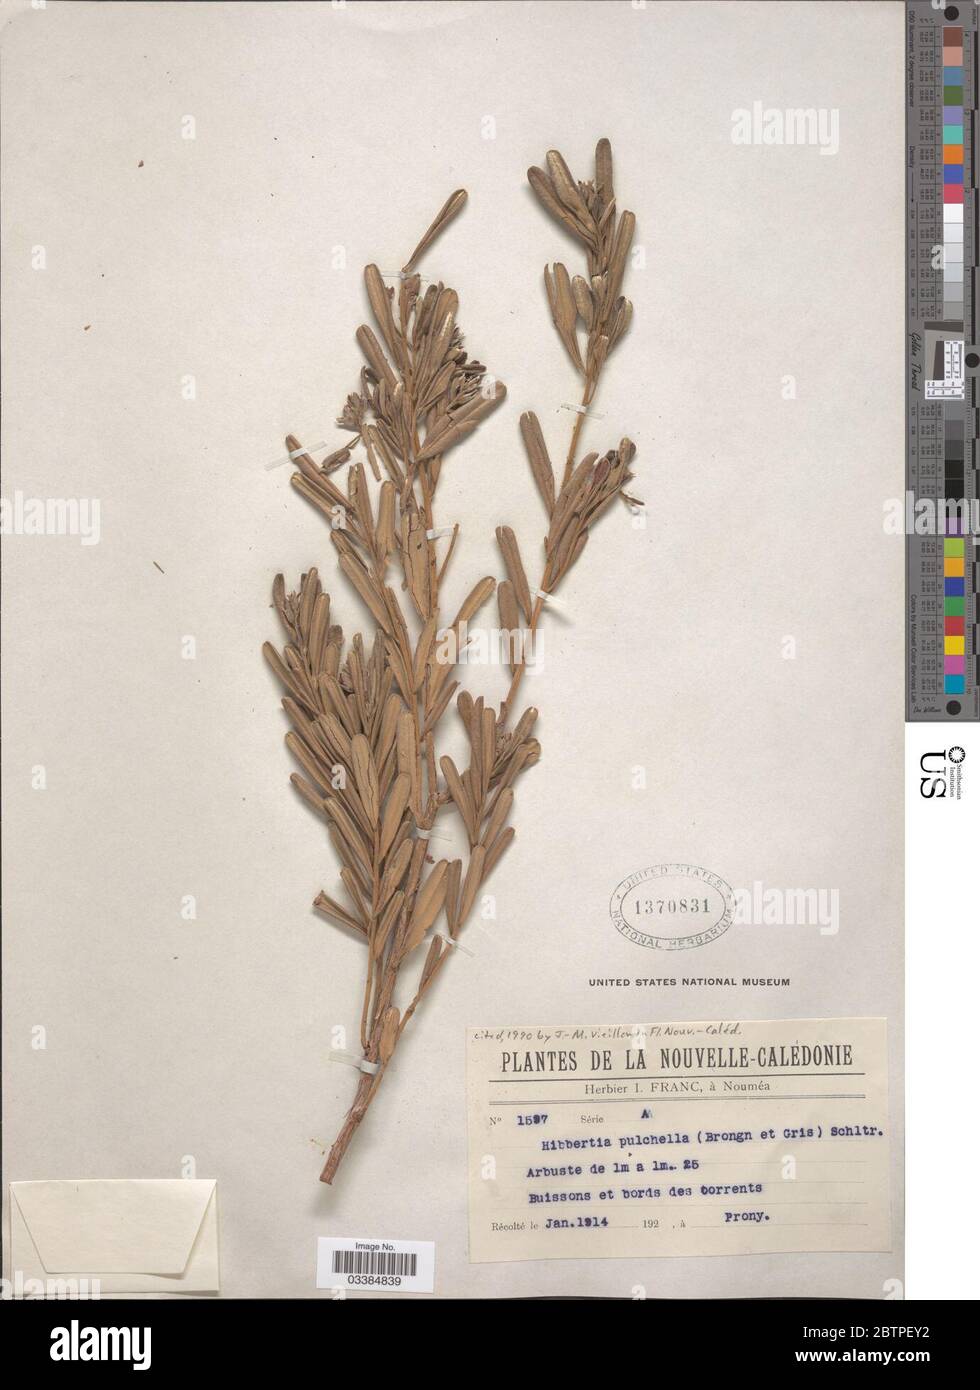 Hibbertia pulchella Brongn Gris Schltr. Stock Photo